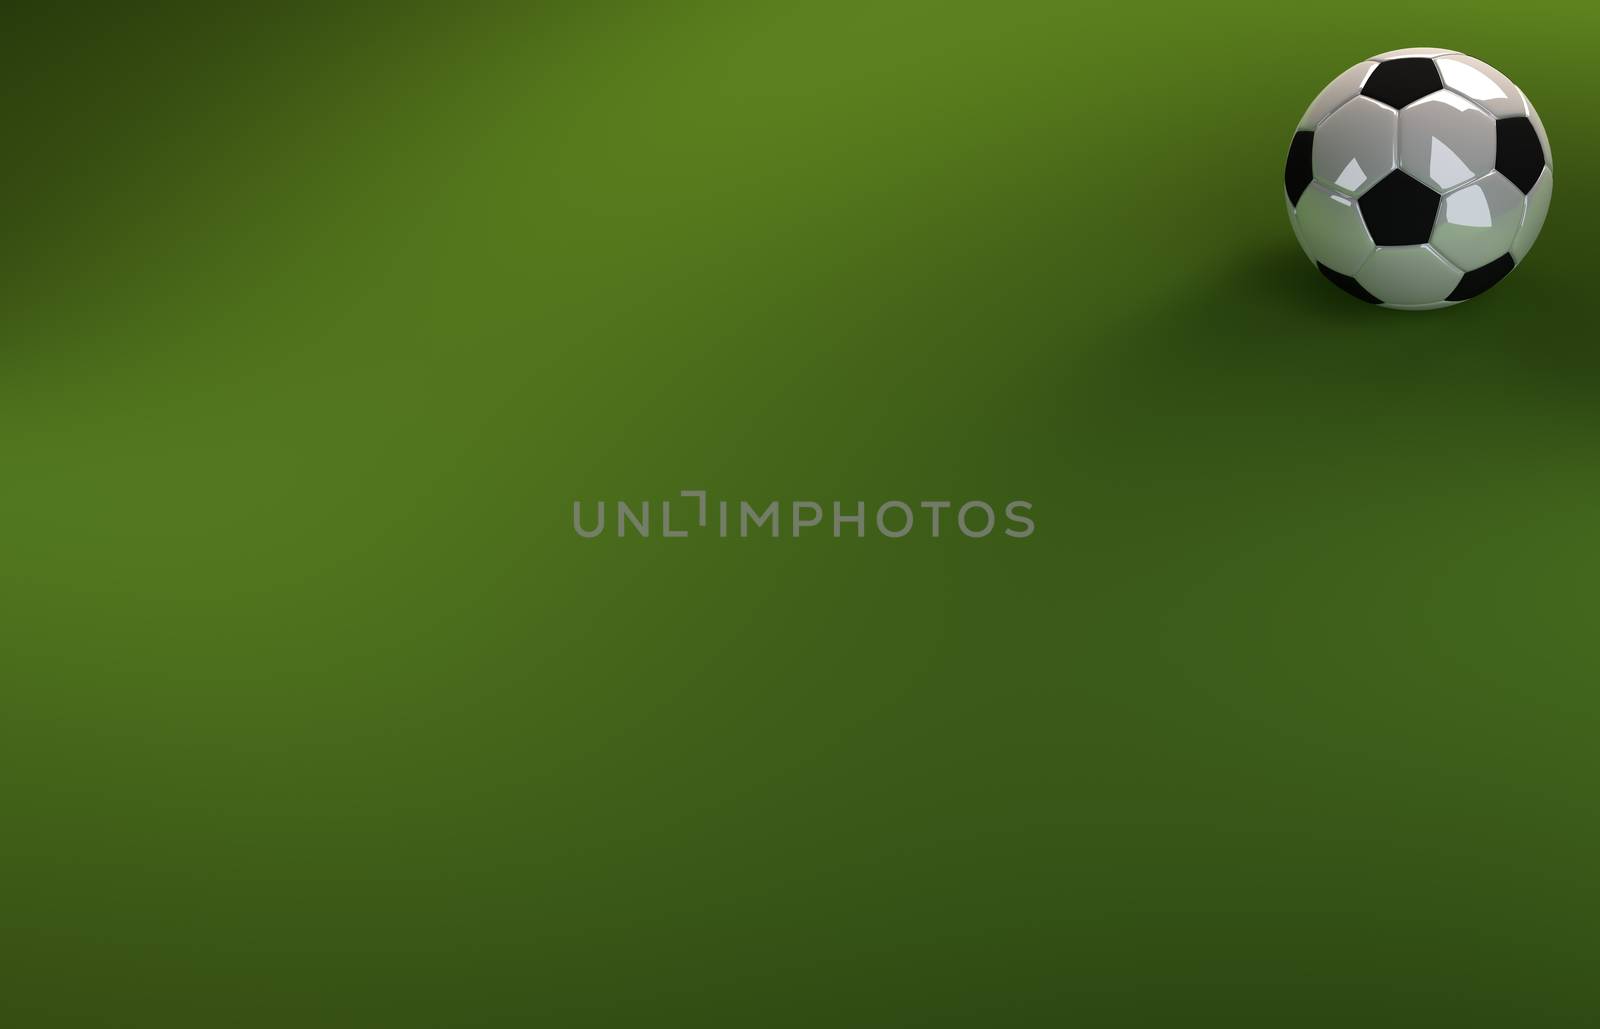 Football on Green Background by Daniel_Wiedemann